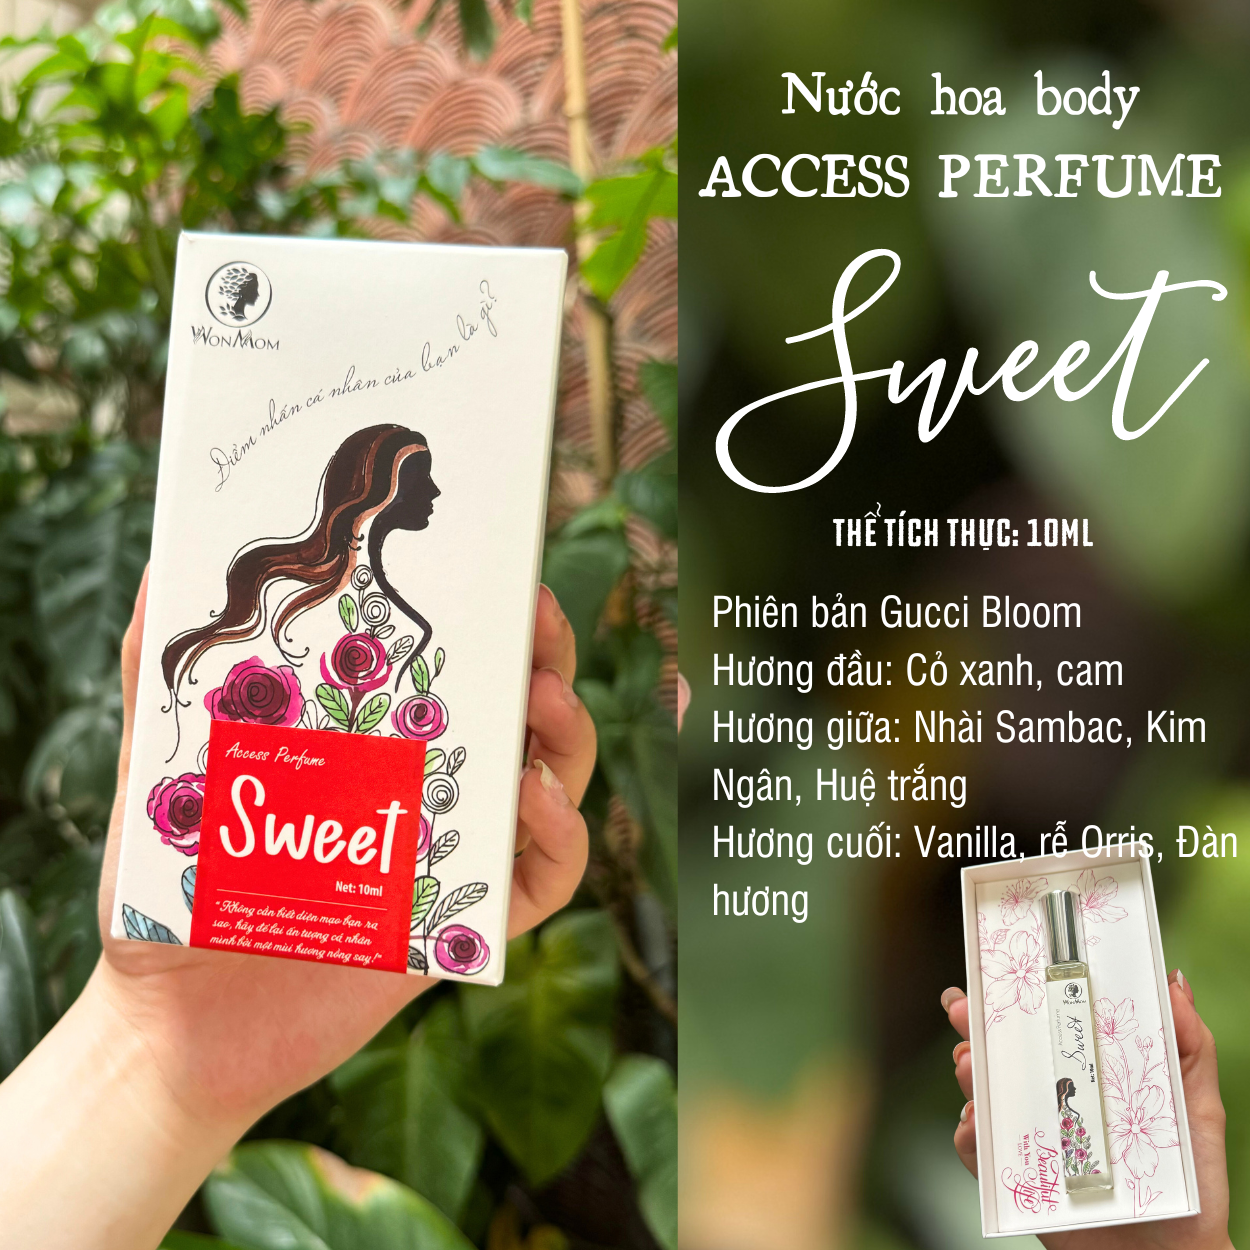 Nước hoa toàn thân Access perfume - Sweet